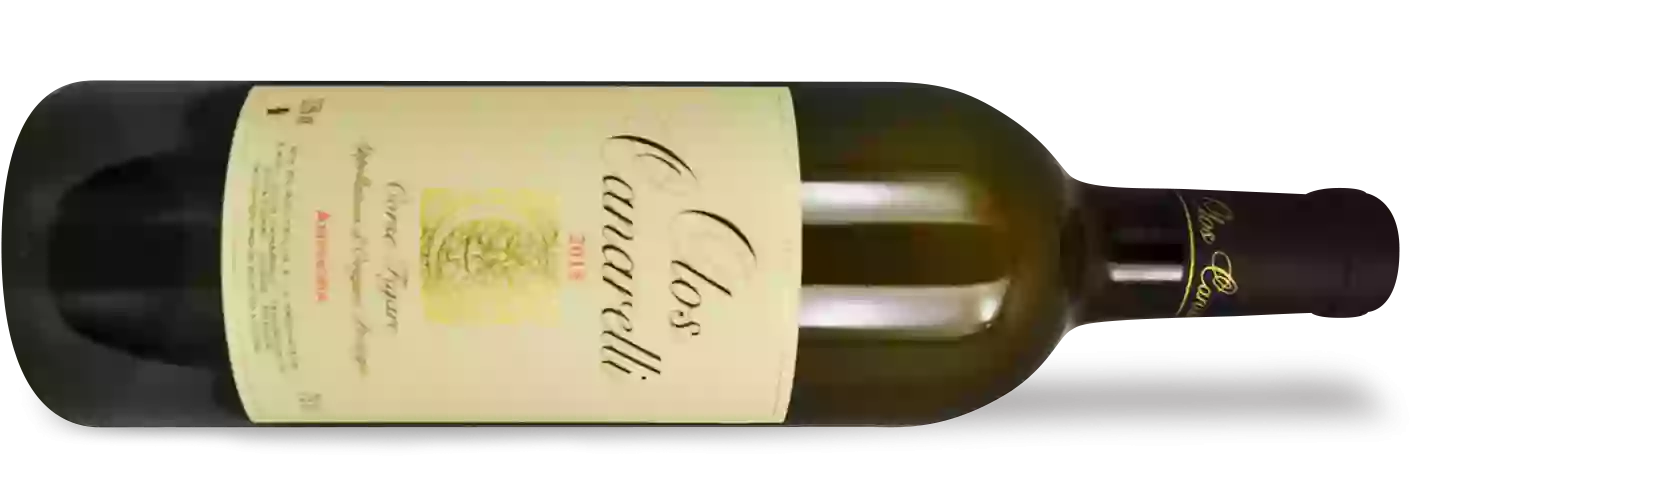 Winery Leipp-Leininger - Saveurs d'Agrumes